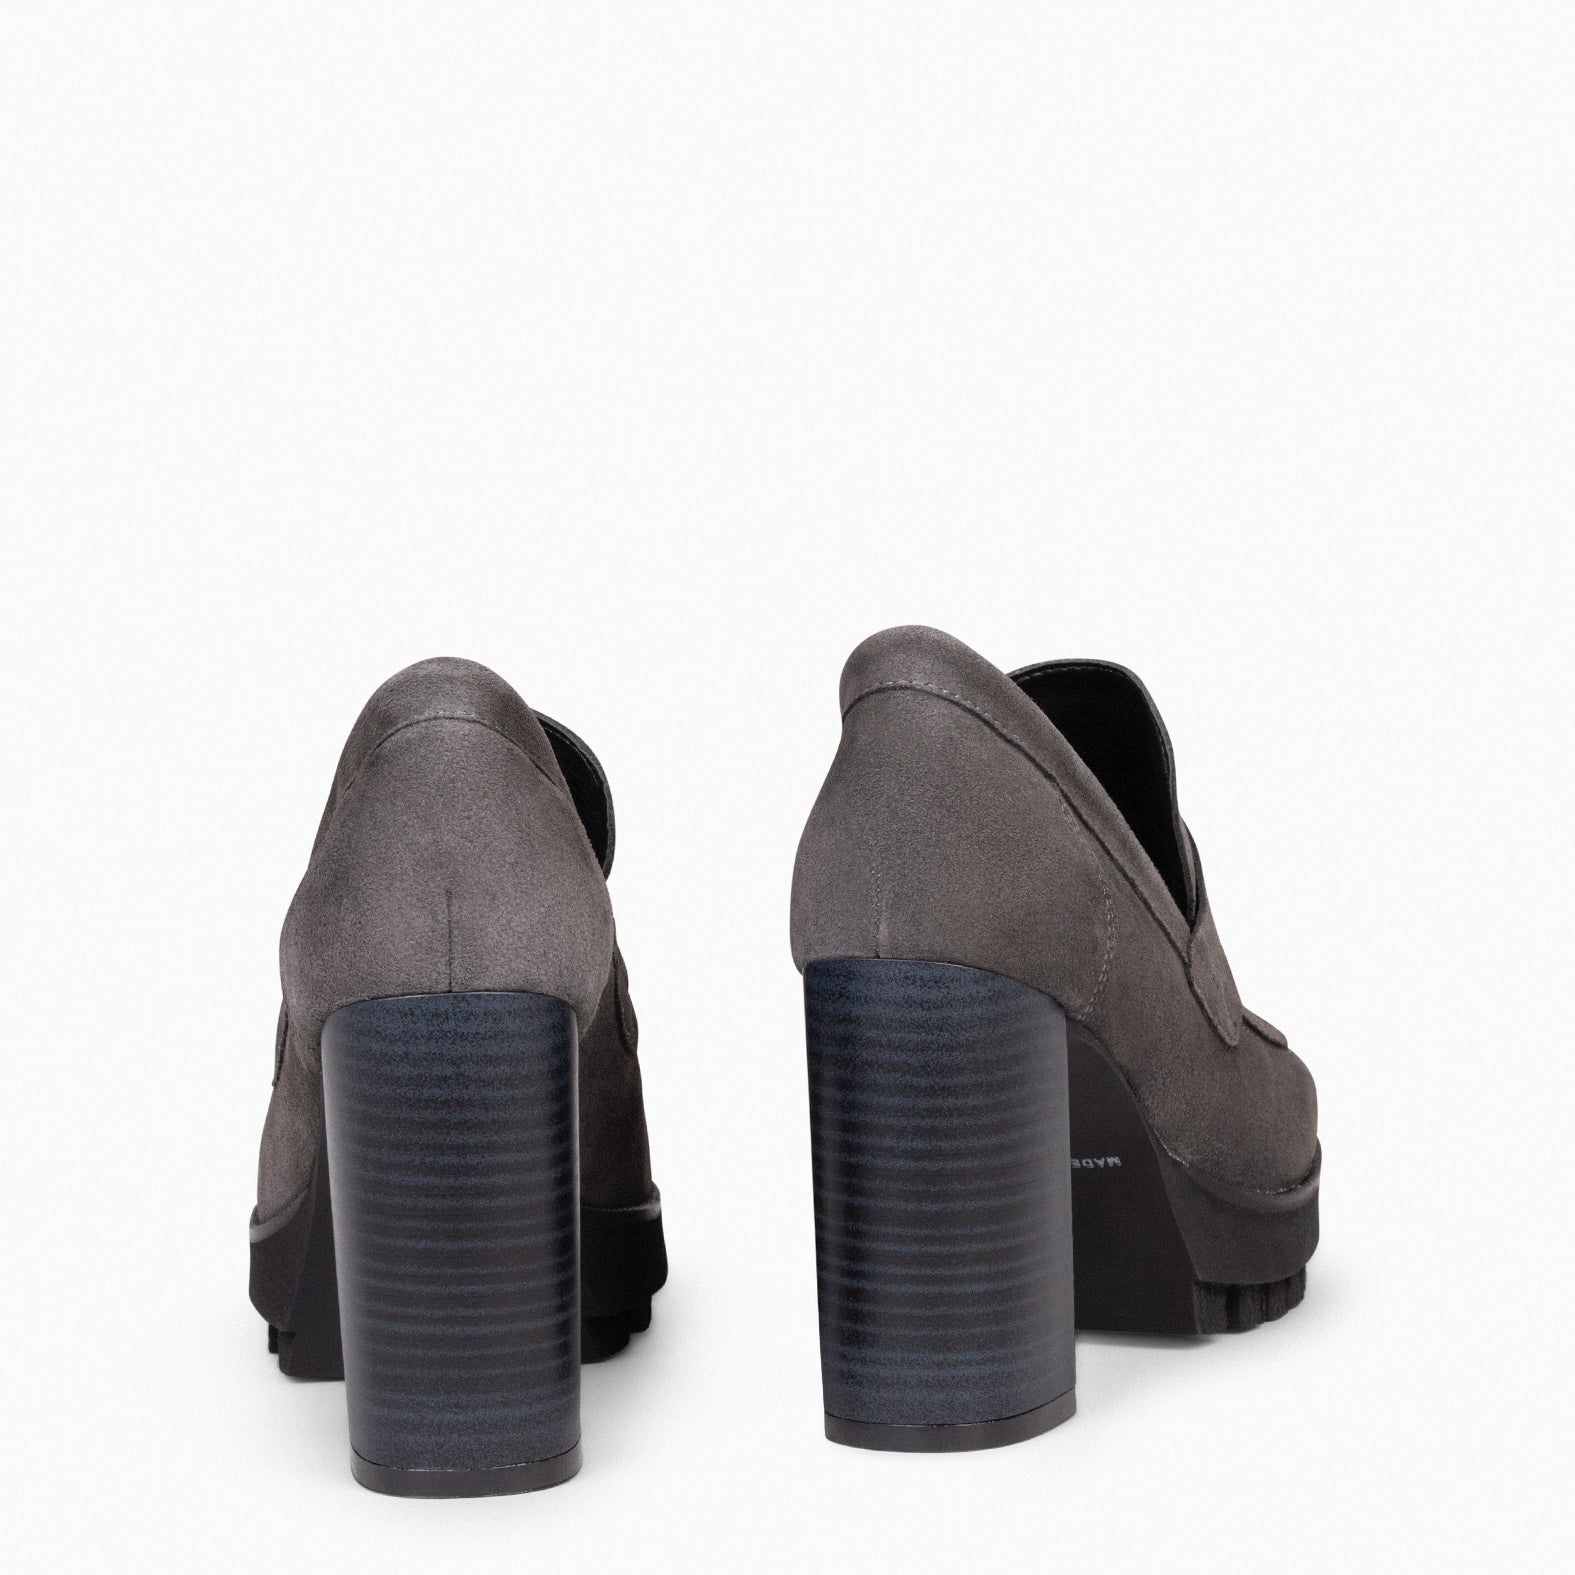 TREND – GREY high heel moccasins with platform 